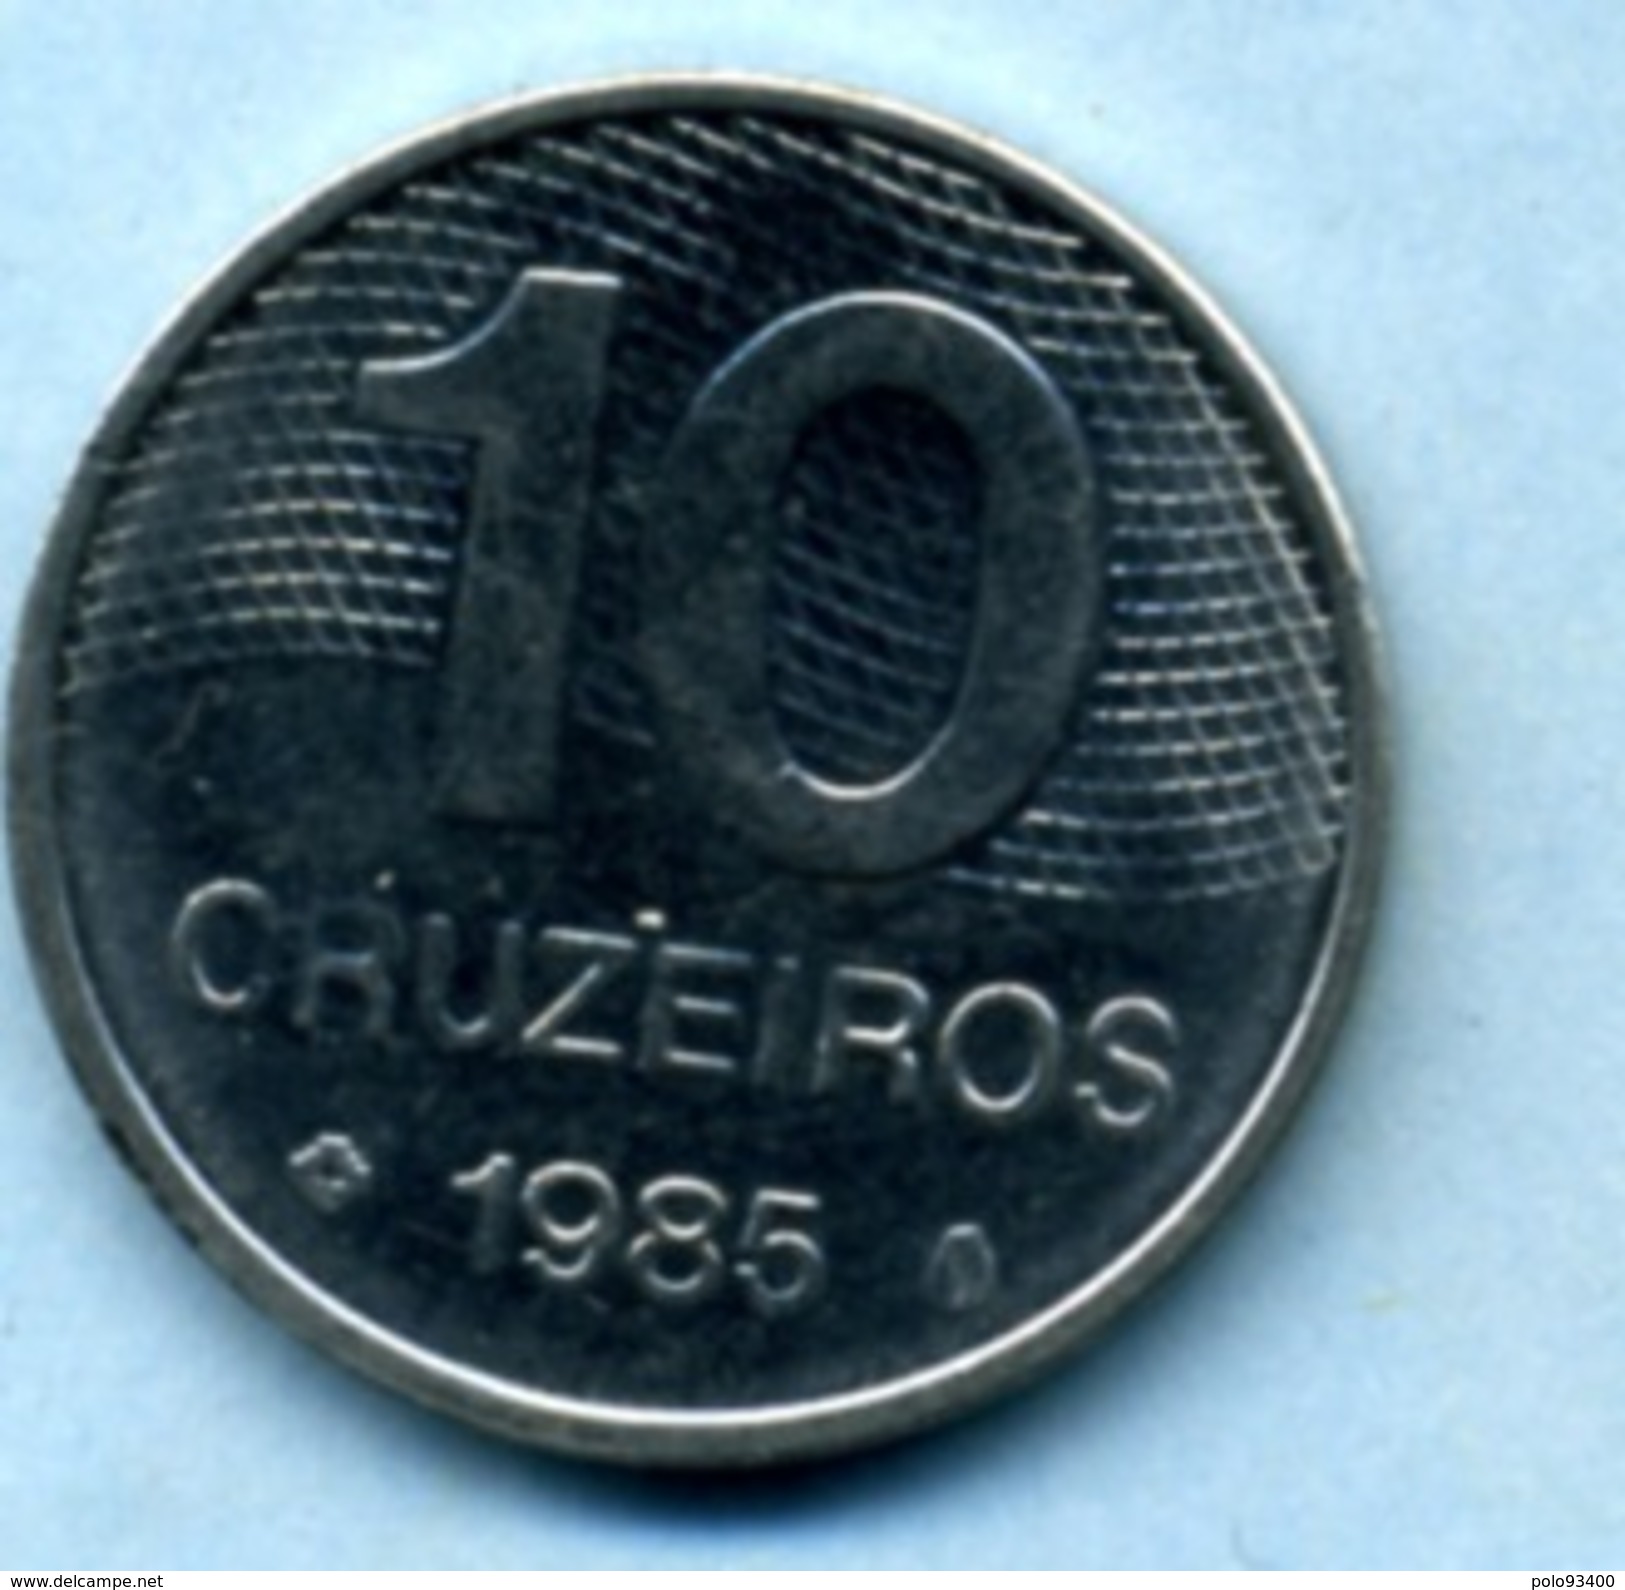 1985 10 CRUZEIROS - Brésil